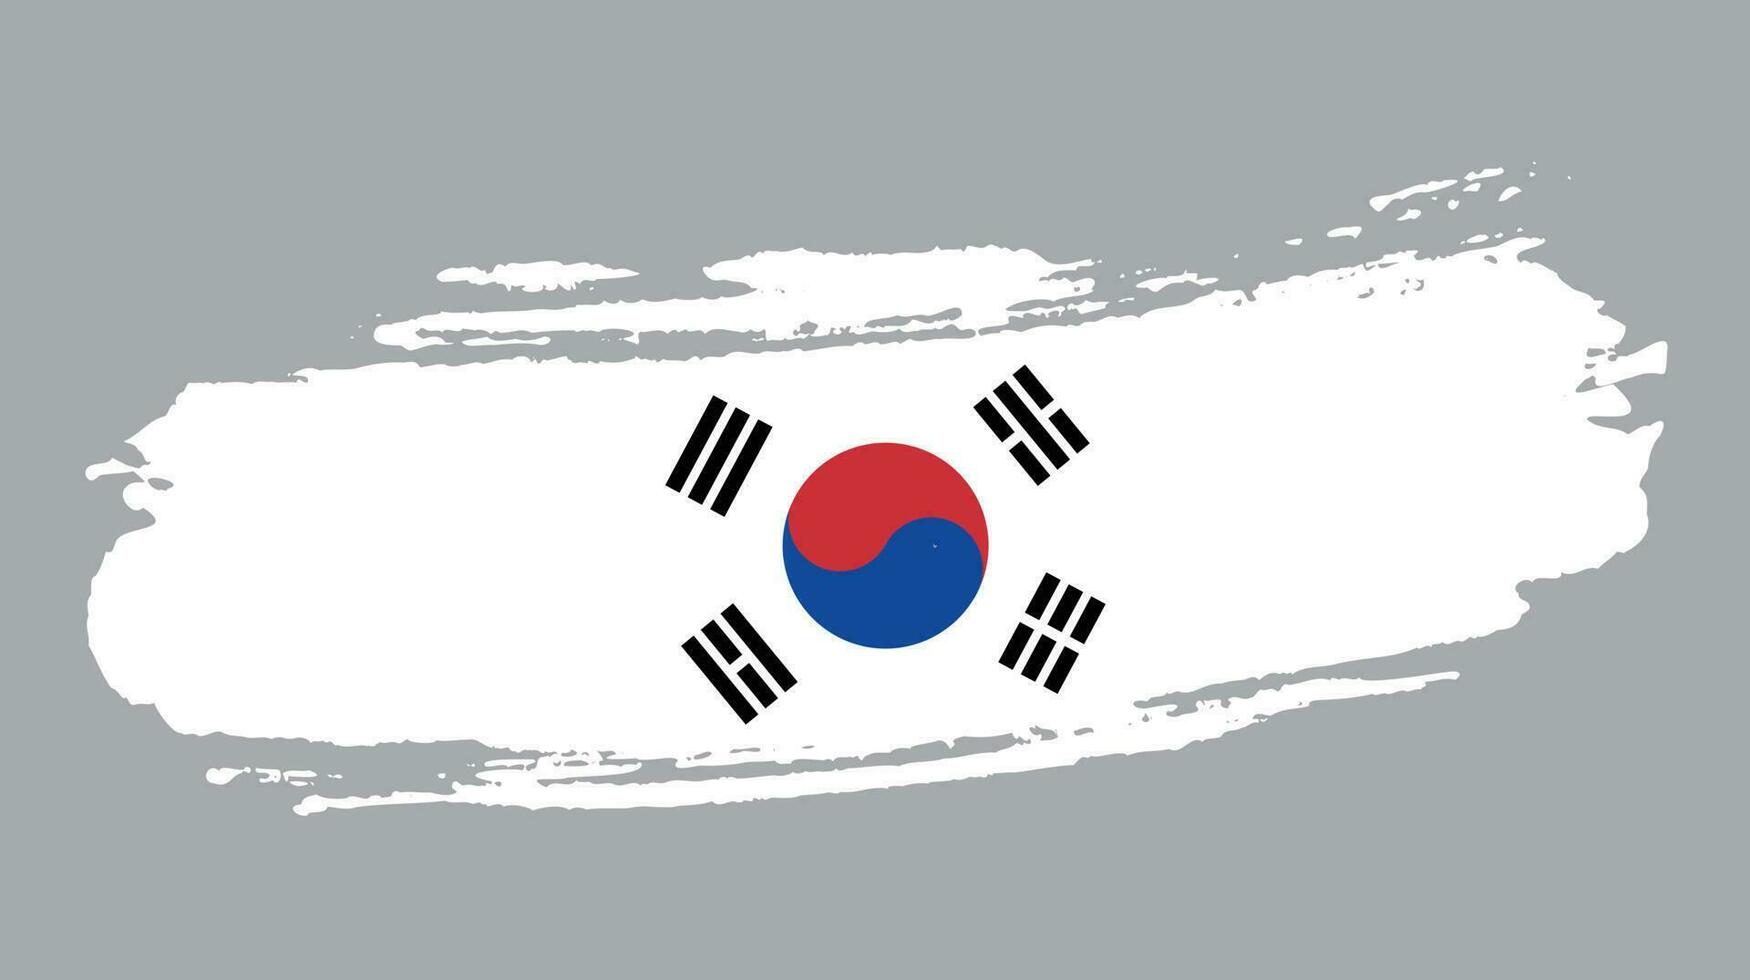 South Korea grunge texture abstract flag vector